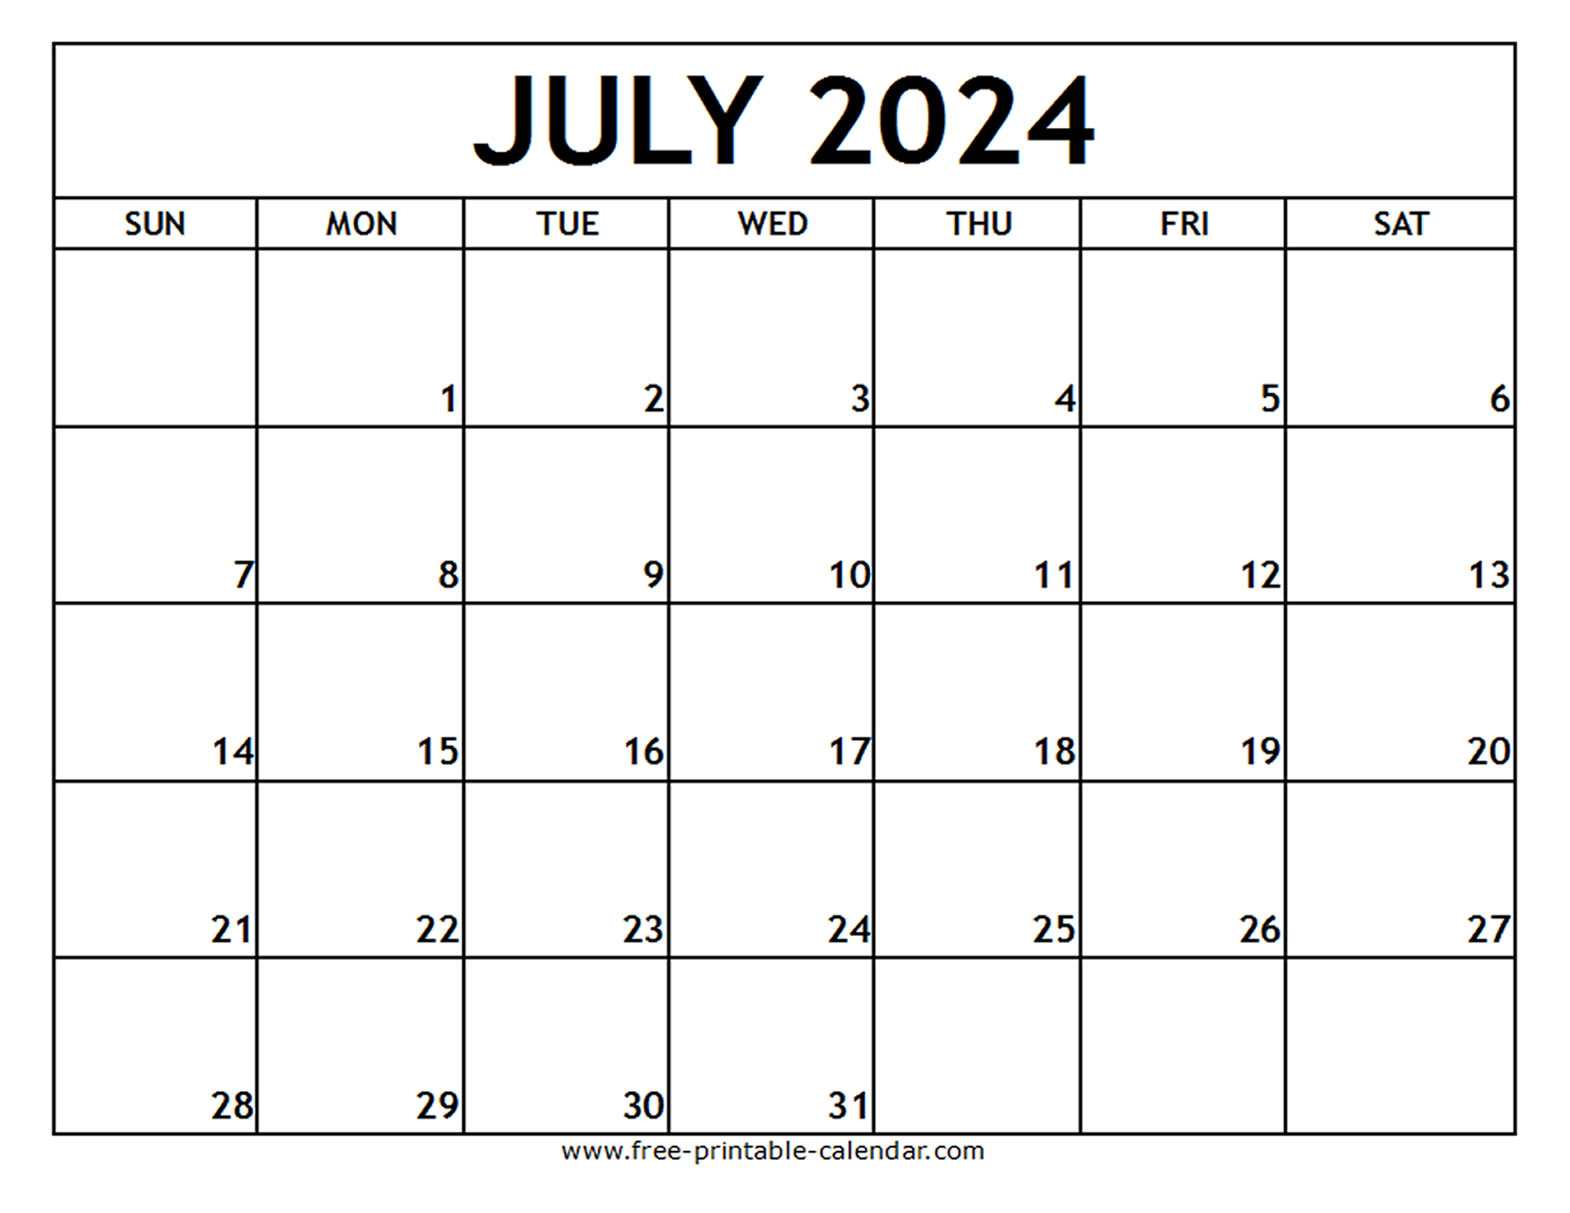 July 2024 Printable Calendar - Free-Printable-Calendar | Month Of July Printable Calendar 2024